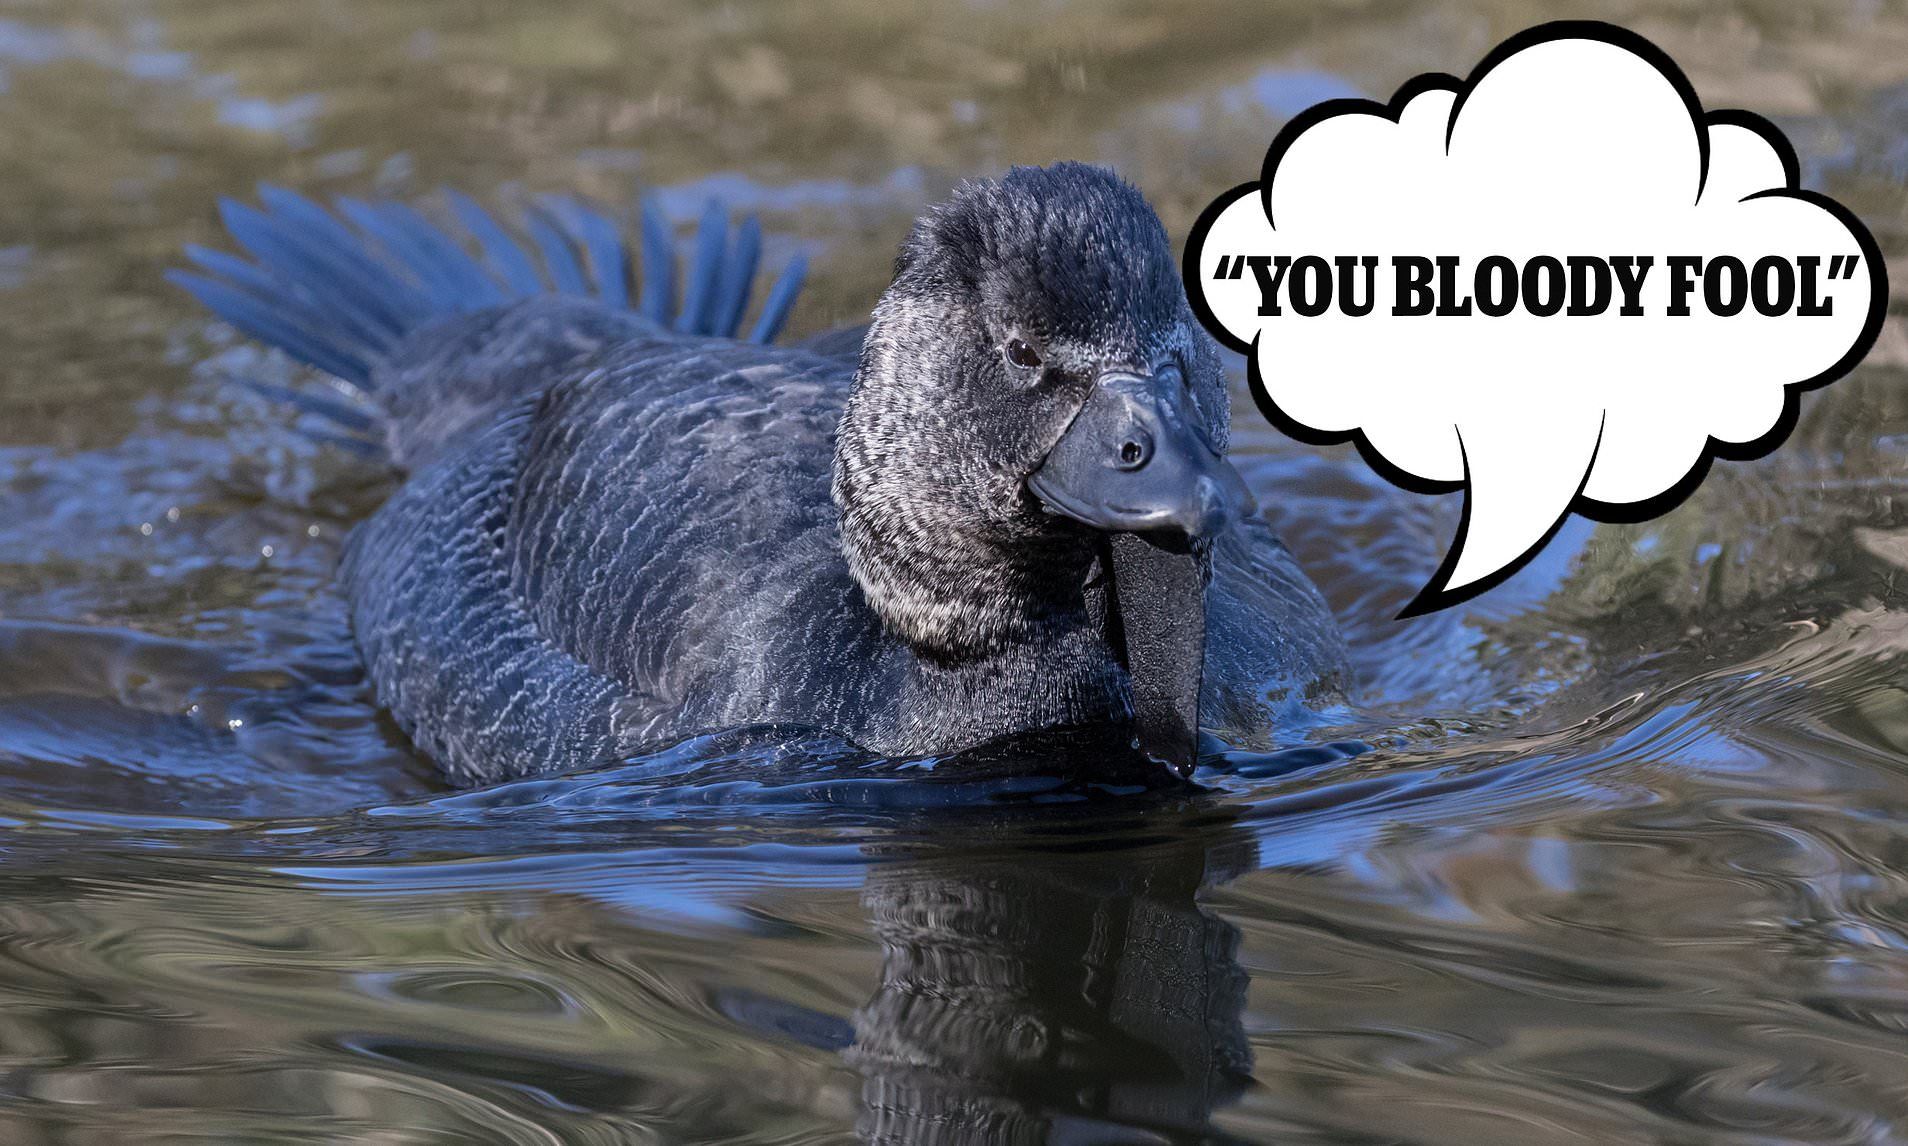 "You bloody fool": Australian duck imitates human speech